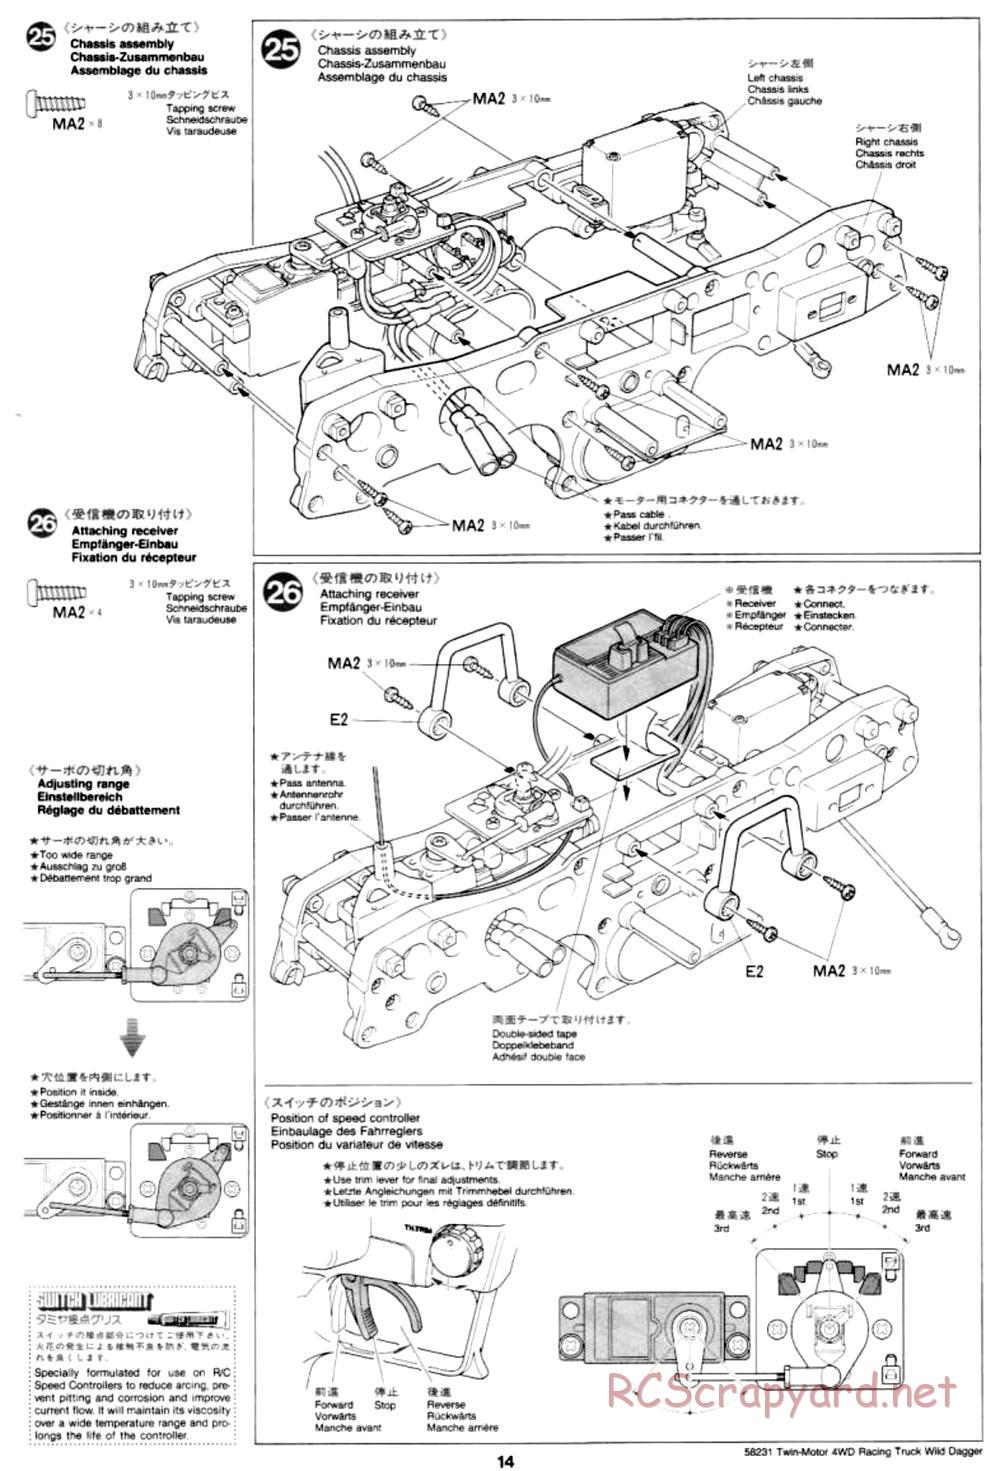 Tamiya - Wild Dagger - WR-01 Chassis - Manual - Page 14